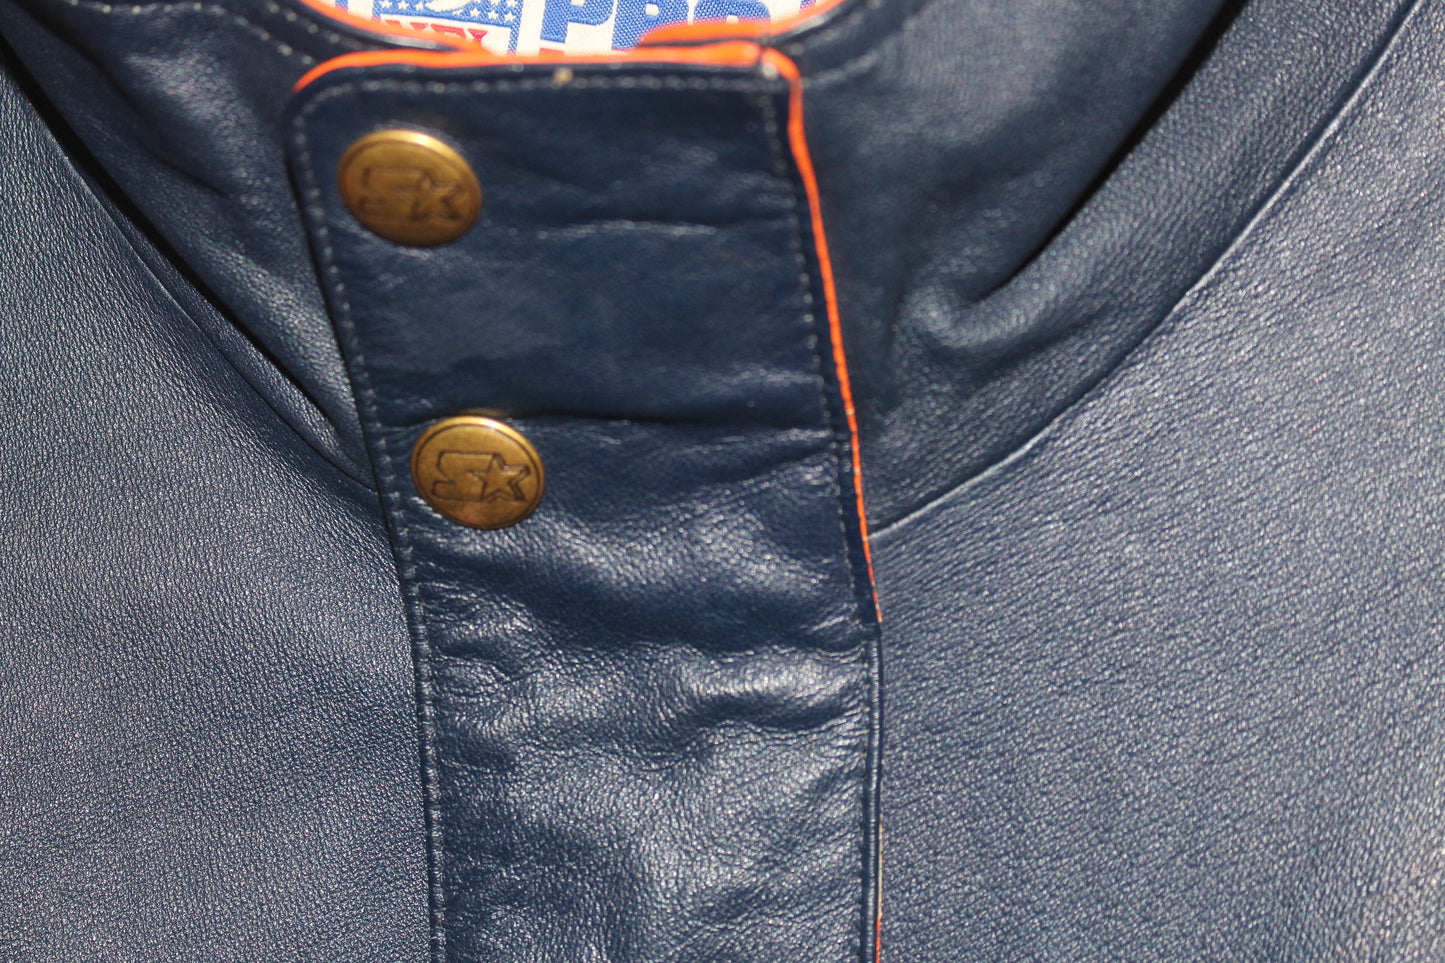 Rare Chicago Bears Pro Line Starter Leather Jacket (M)